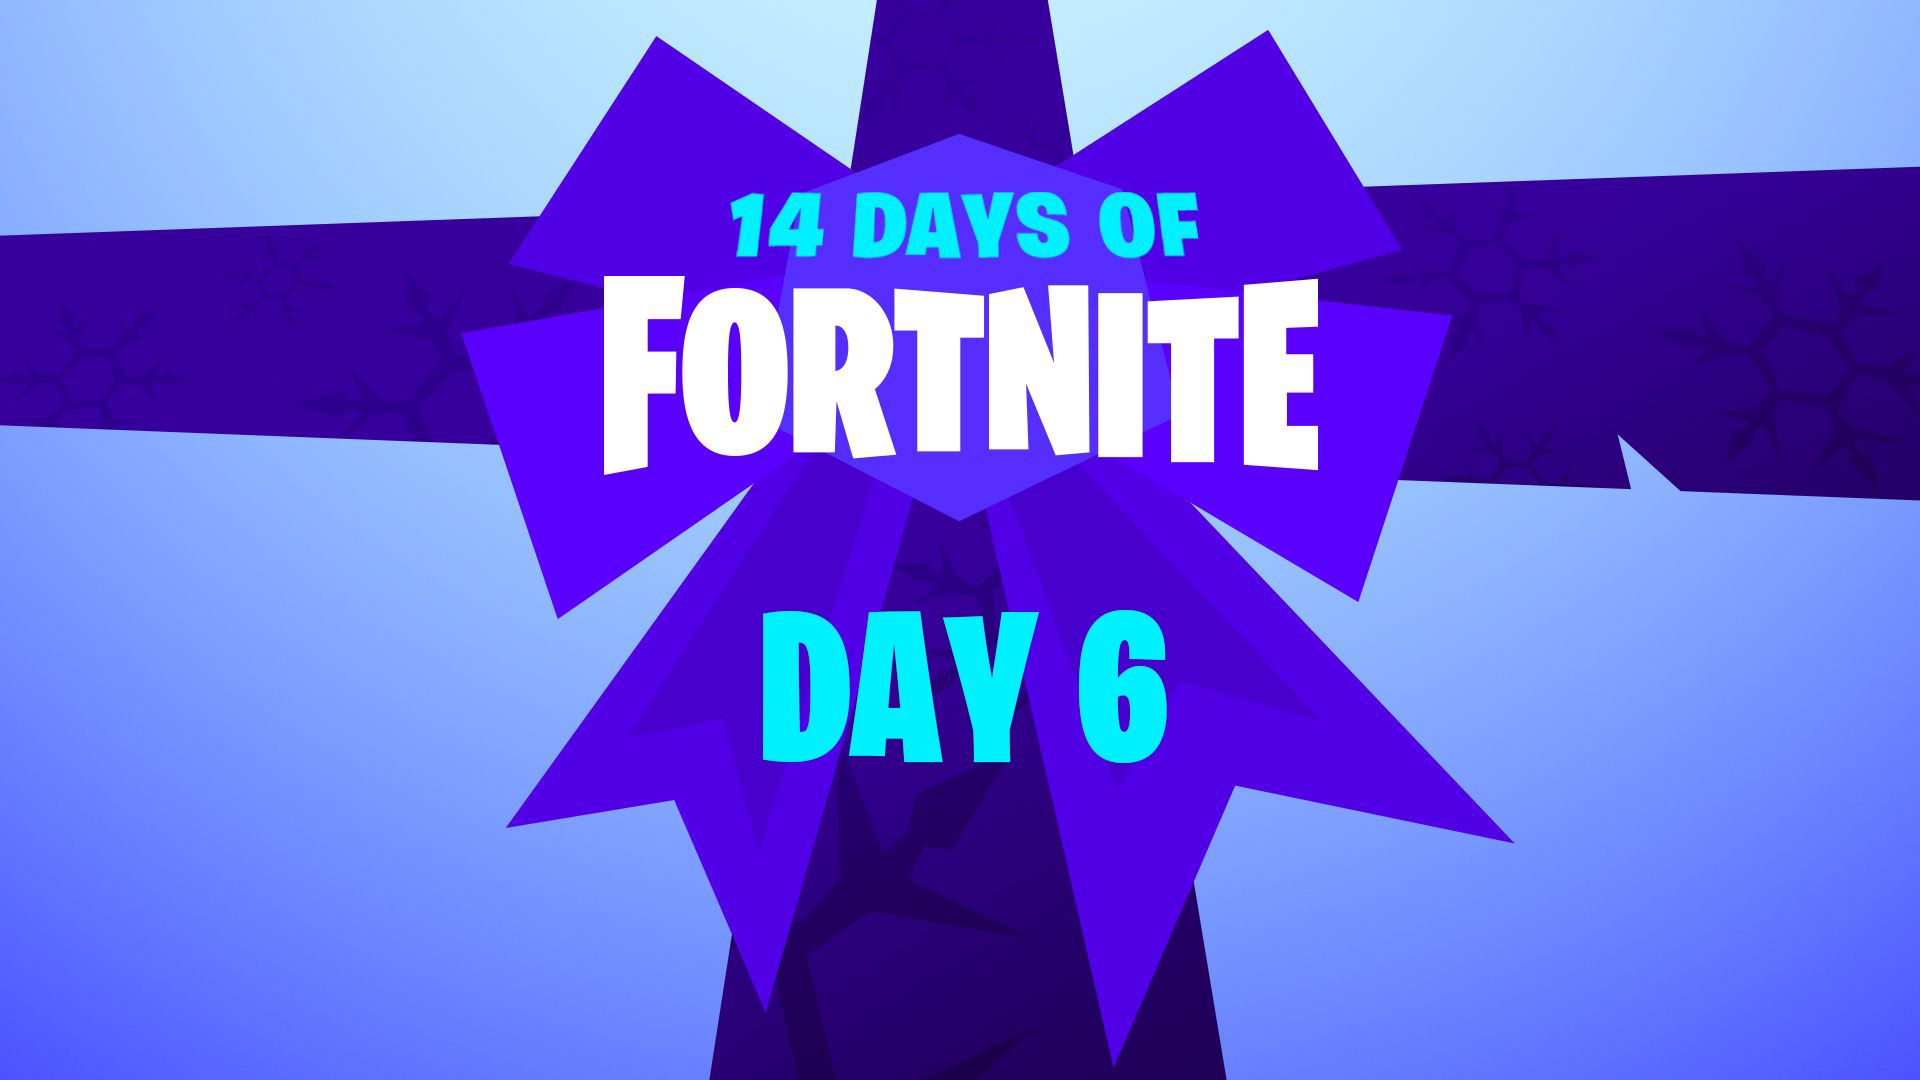 14 Days of Fortnite - Day 6 challenge & reward